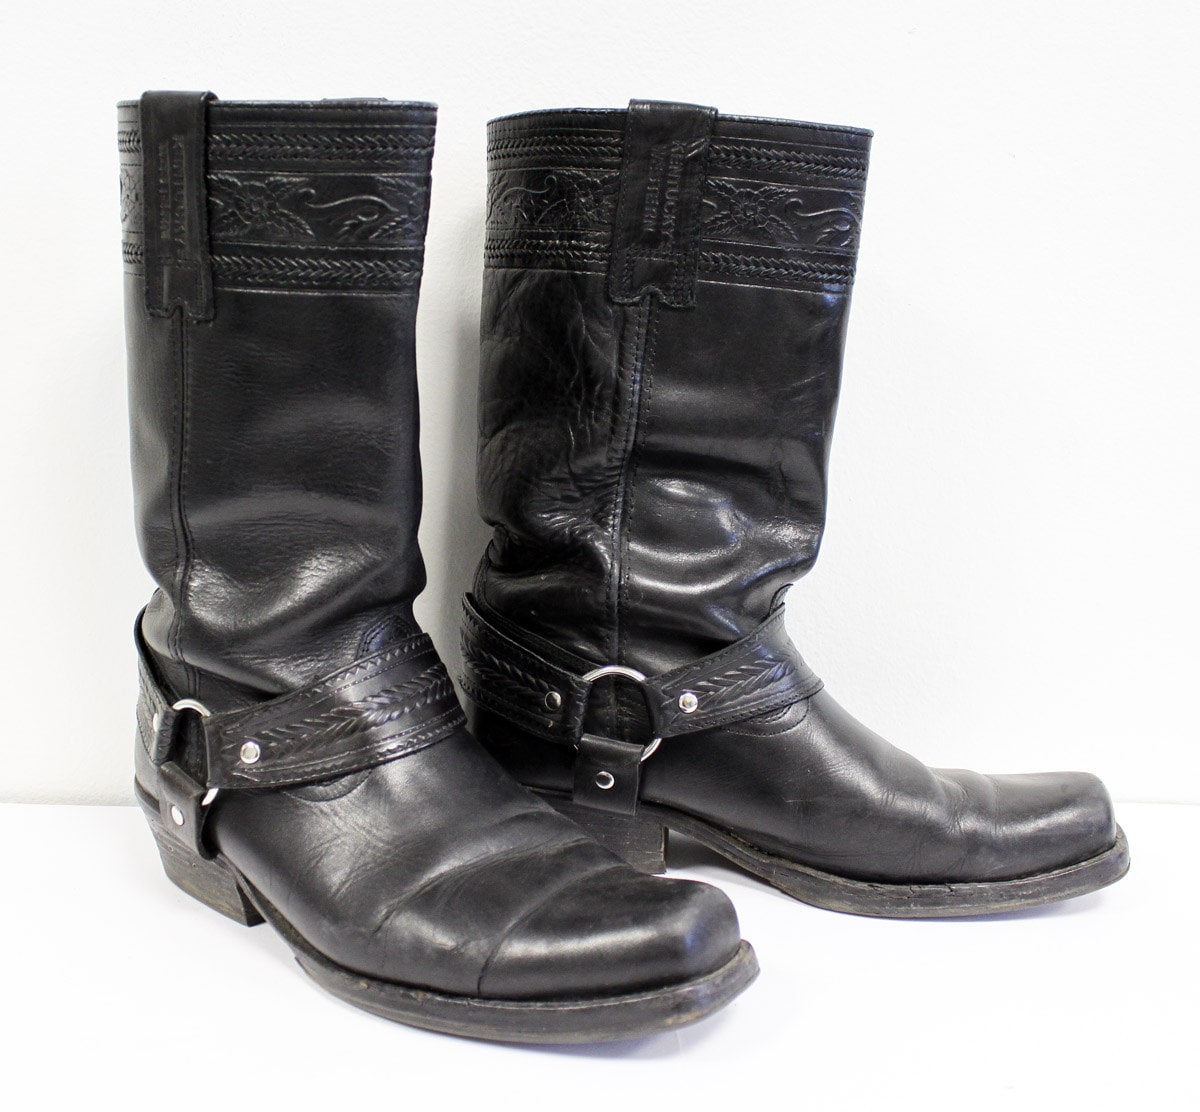 Vintage black Kentucky's Western harness cowboy boots men